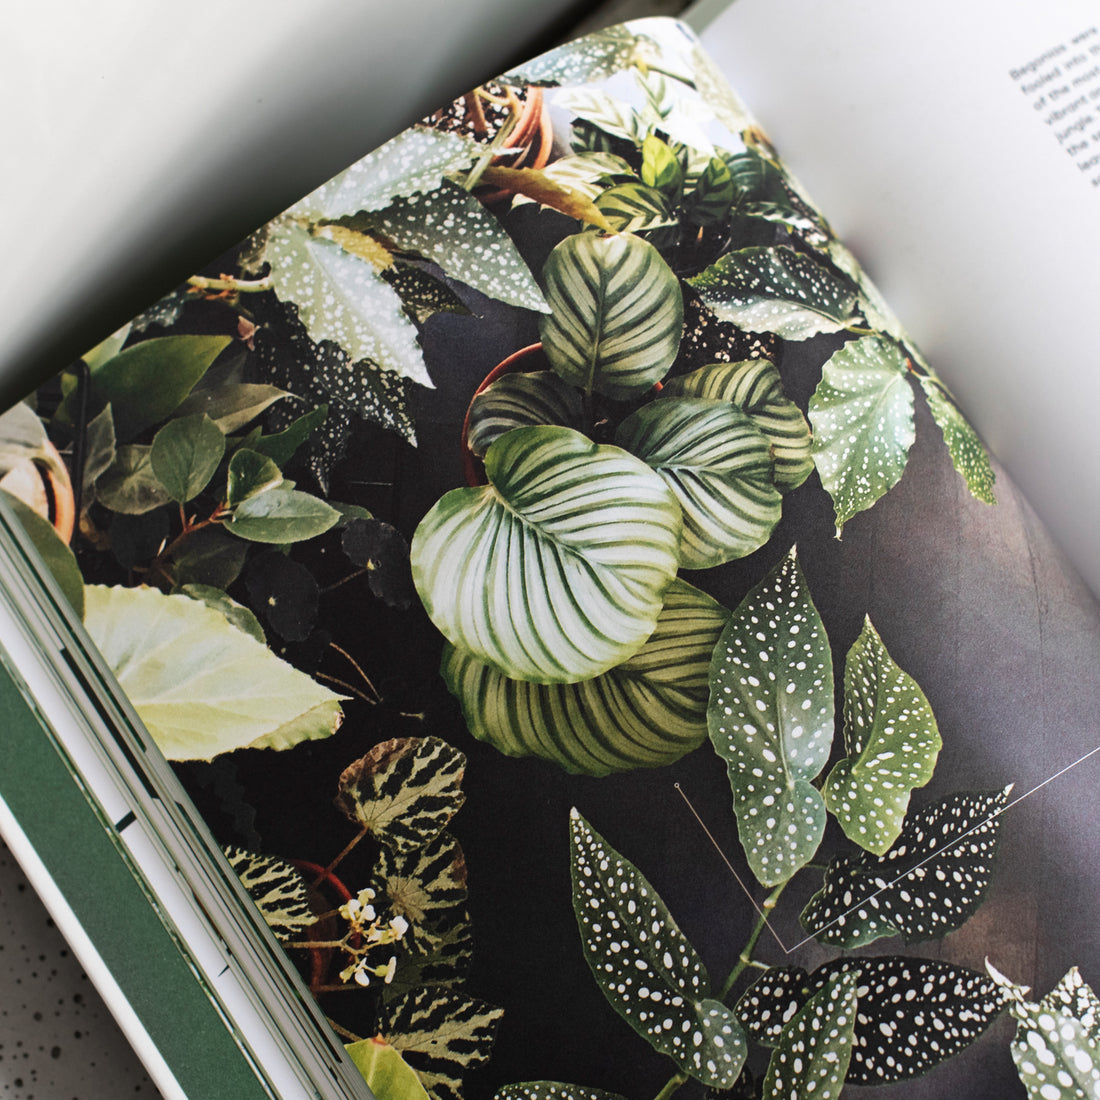 The Leaf Supply Guide to Creating Yours: Indoor Jungle - Lauren Camilleri & Sophia Kaplan